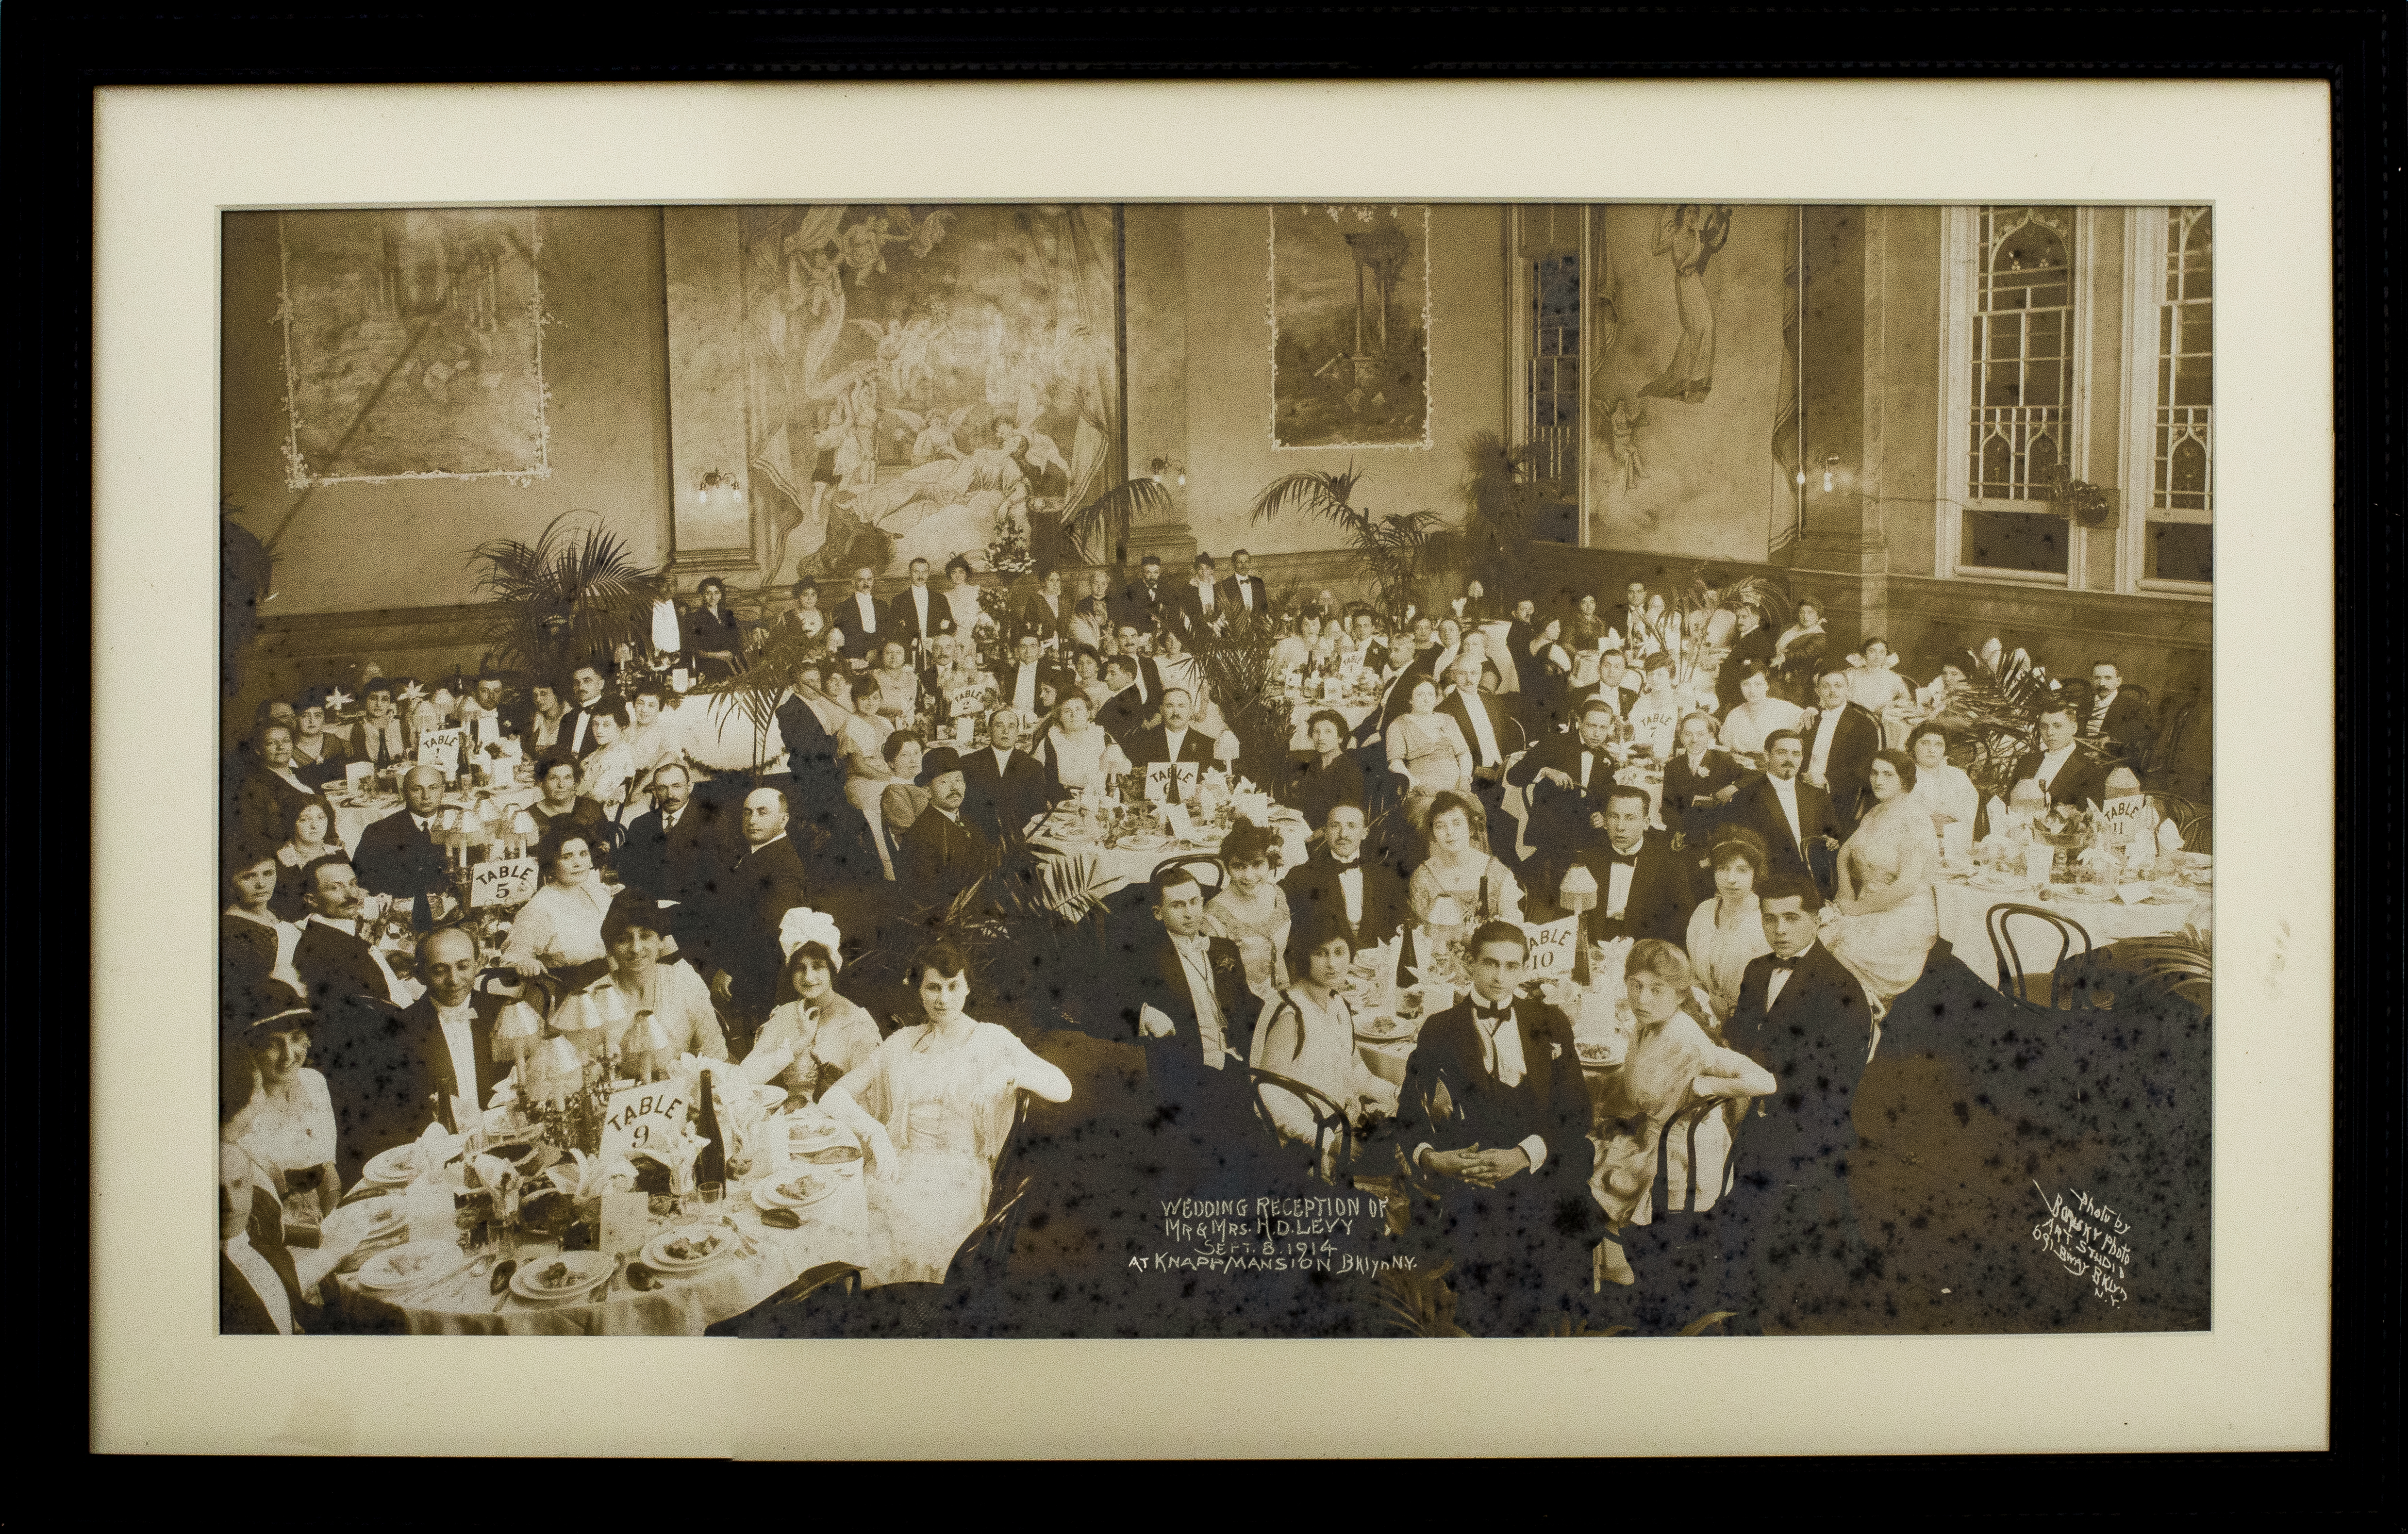 1914 VINTAGE PHOTOGRAPH OF A WEDDING